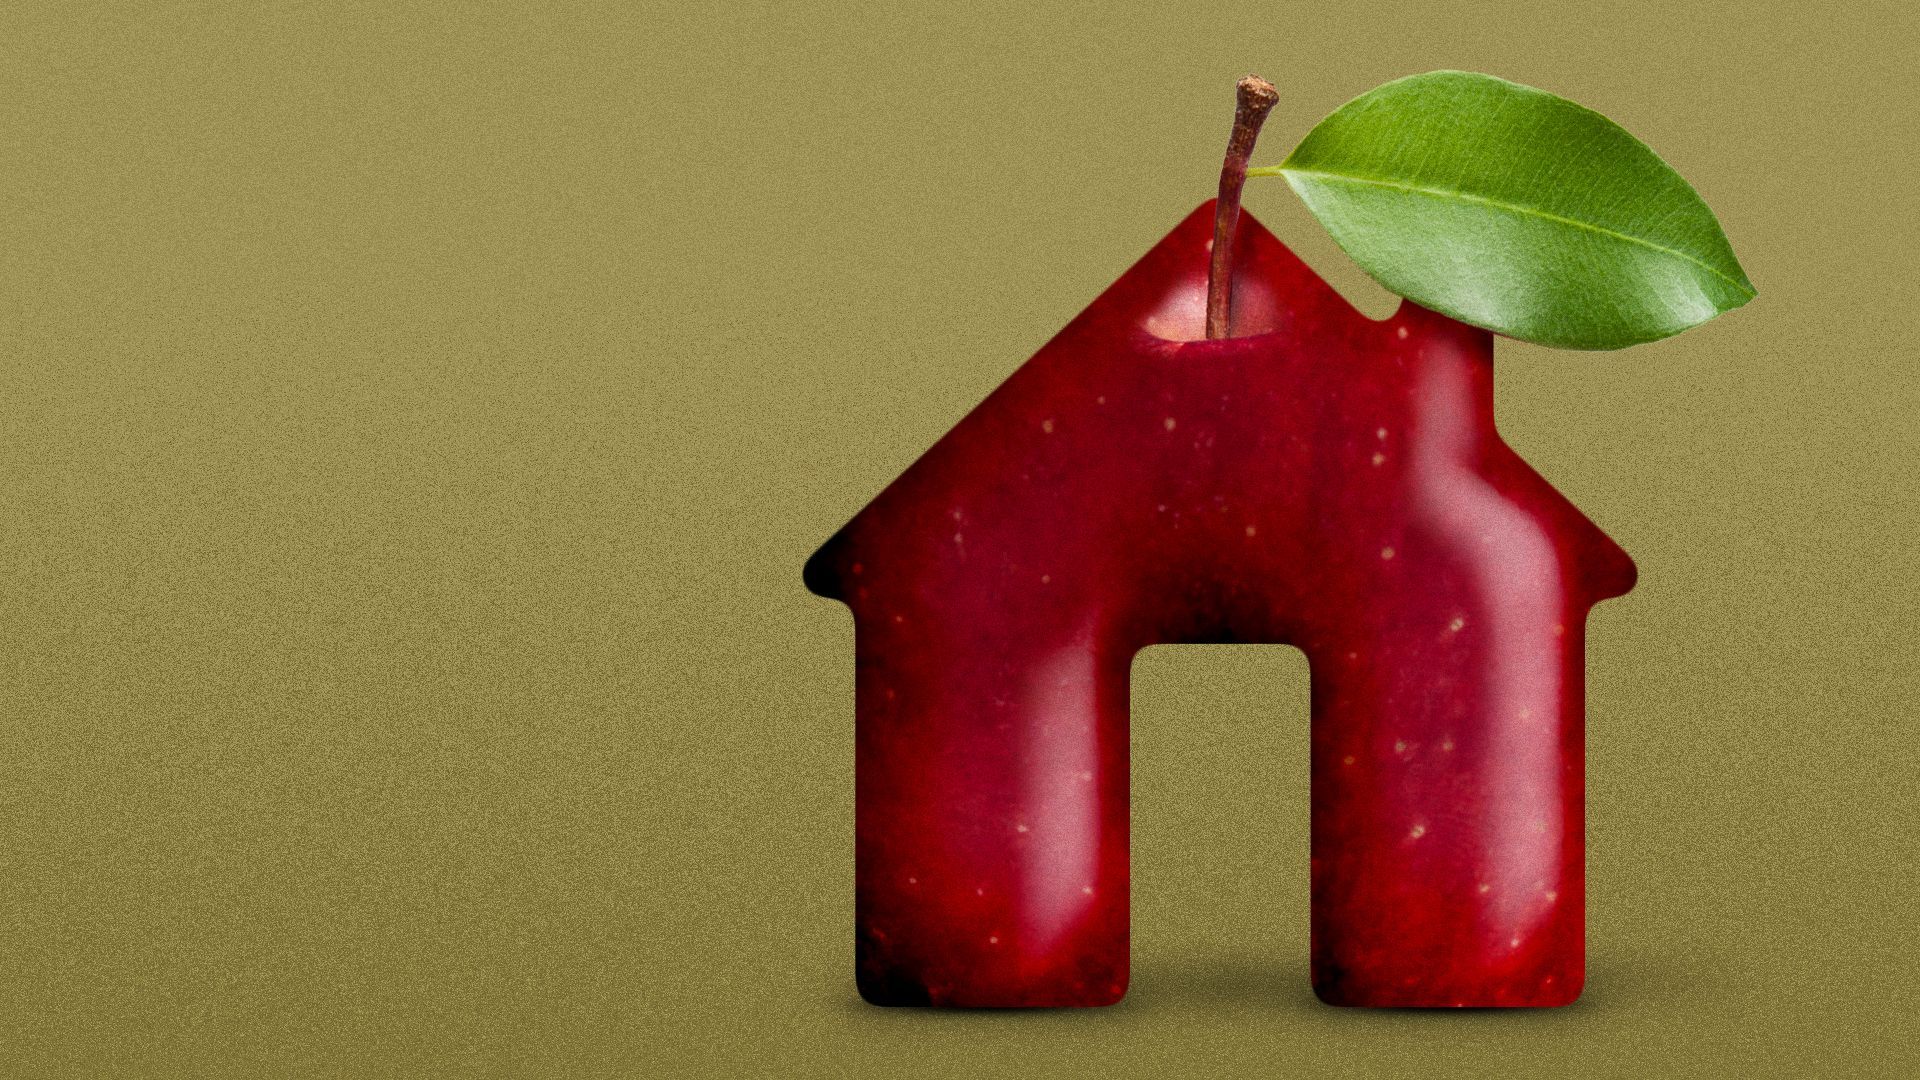 Illustration of an apple shaped like a house. 